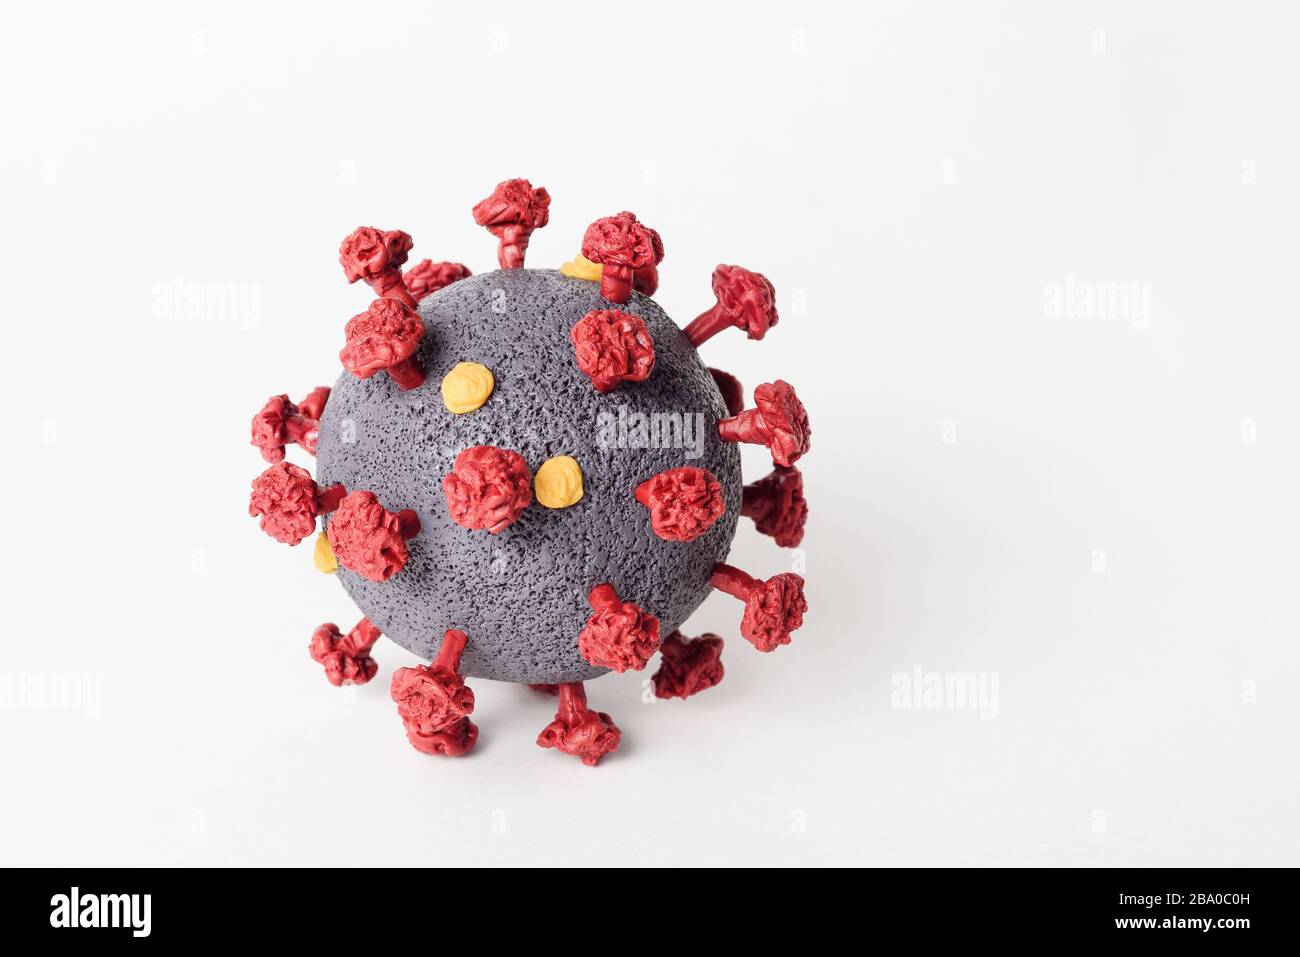 Coronavirus SARS-CoV-2 model close-up on a white background. Dangerous Infectious Disease Virus - COVID-19 Stock Photo